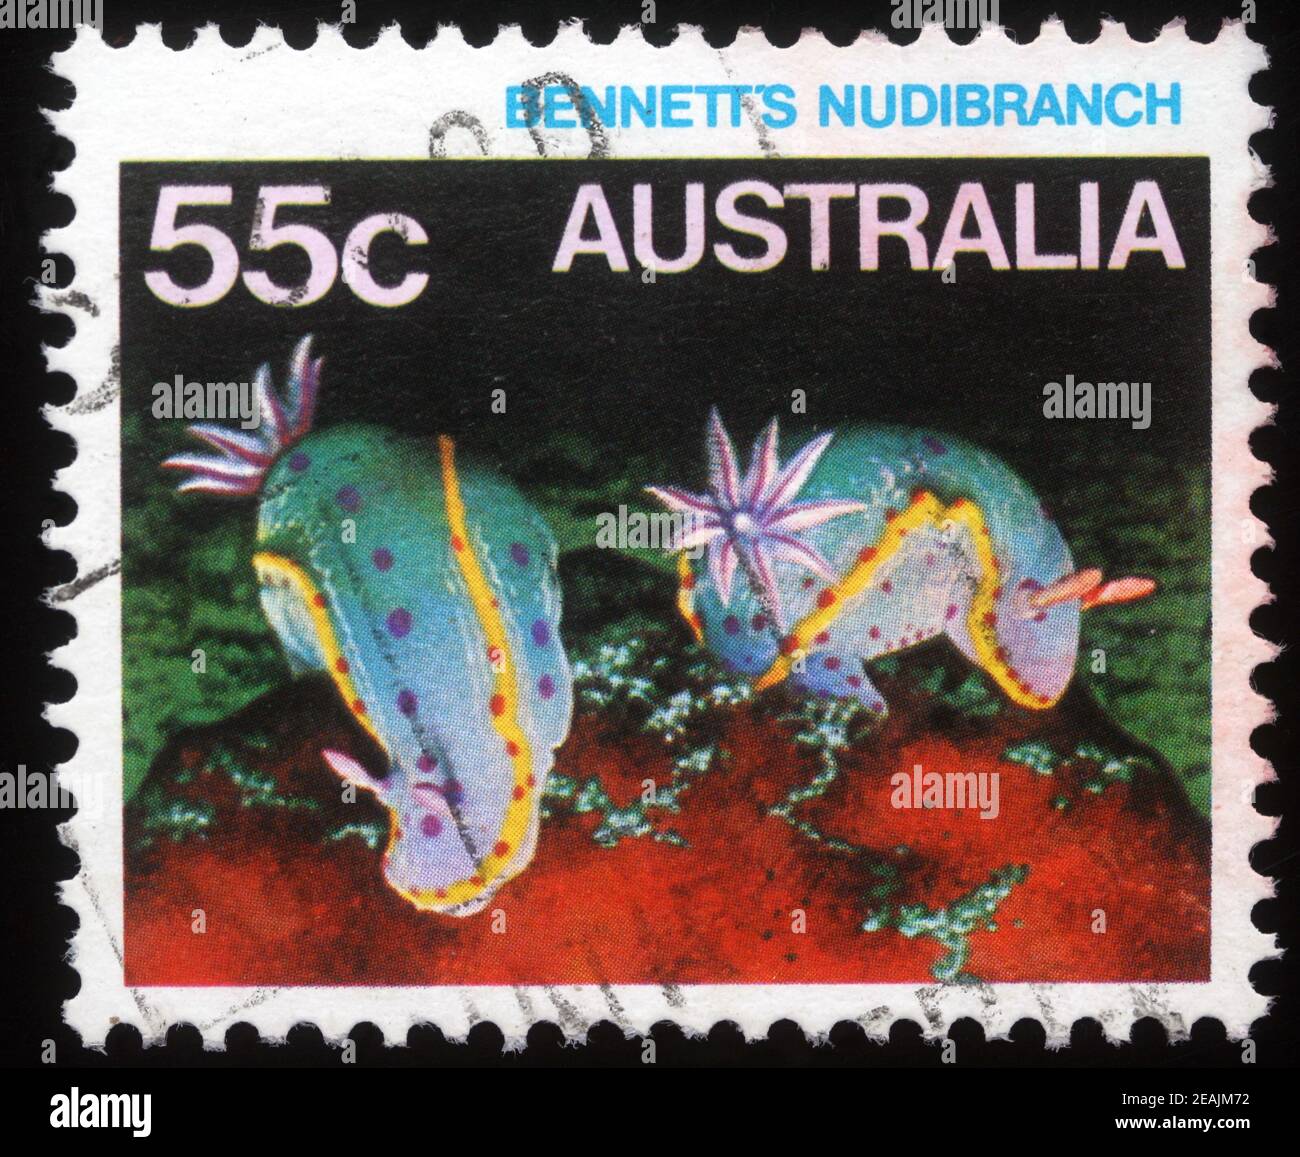 Stempel gedruckt in Australien zeigt Bennettâ €™s Nudibranch, Serie, um 1984 Stockfoto